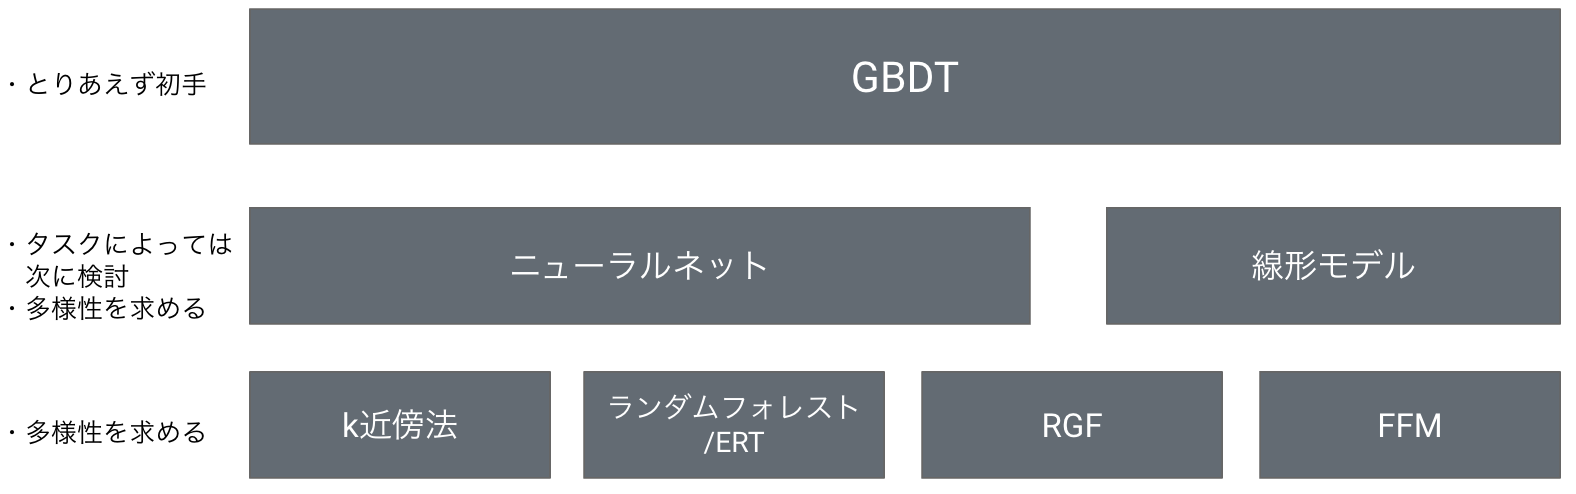 GBDT説明図